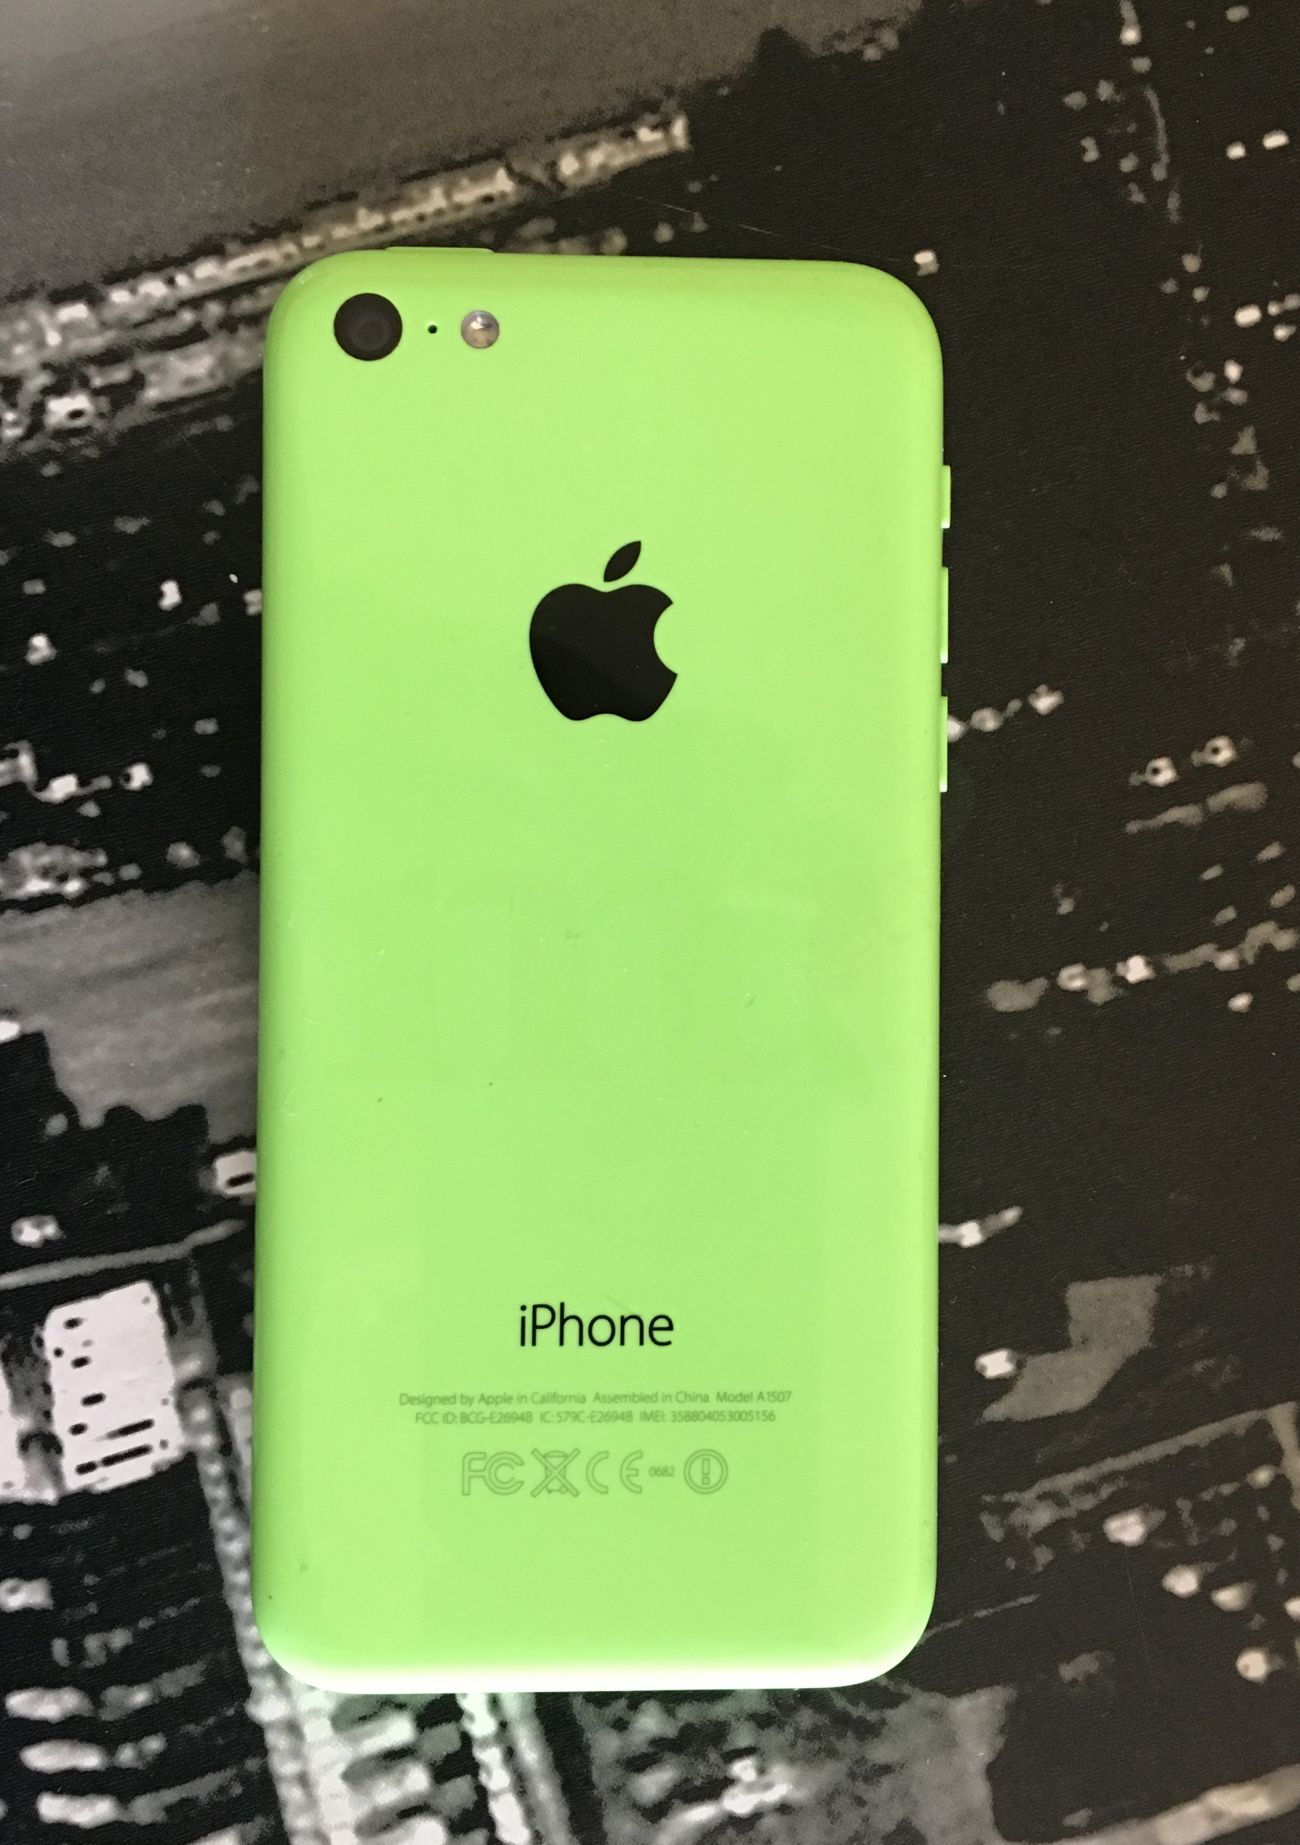 venta iphone 5c 8 gb verde libre | segunda mano apple